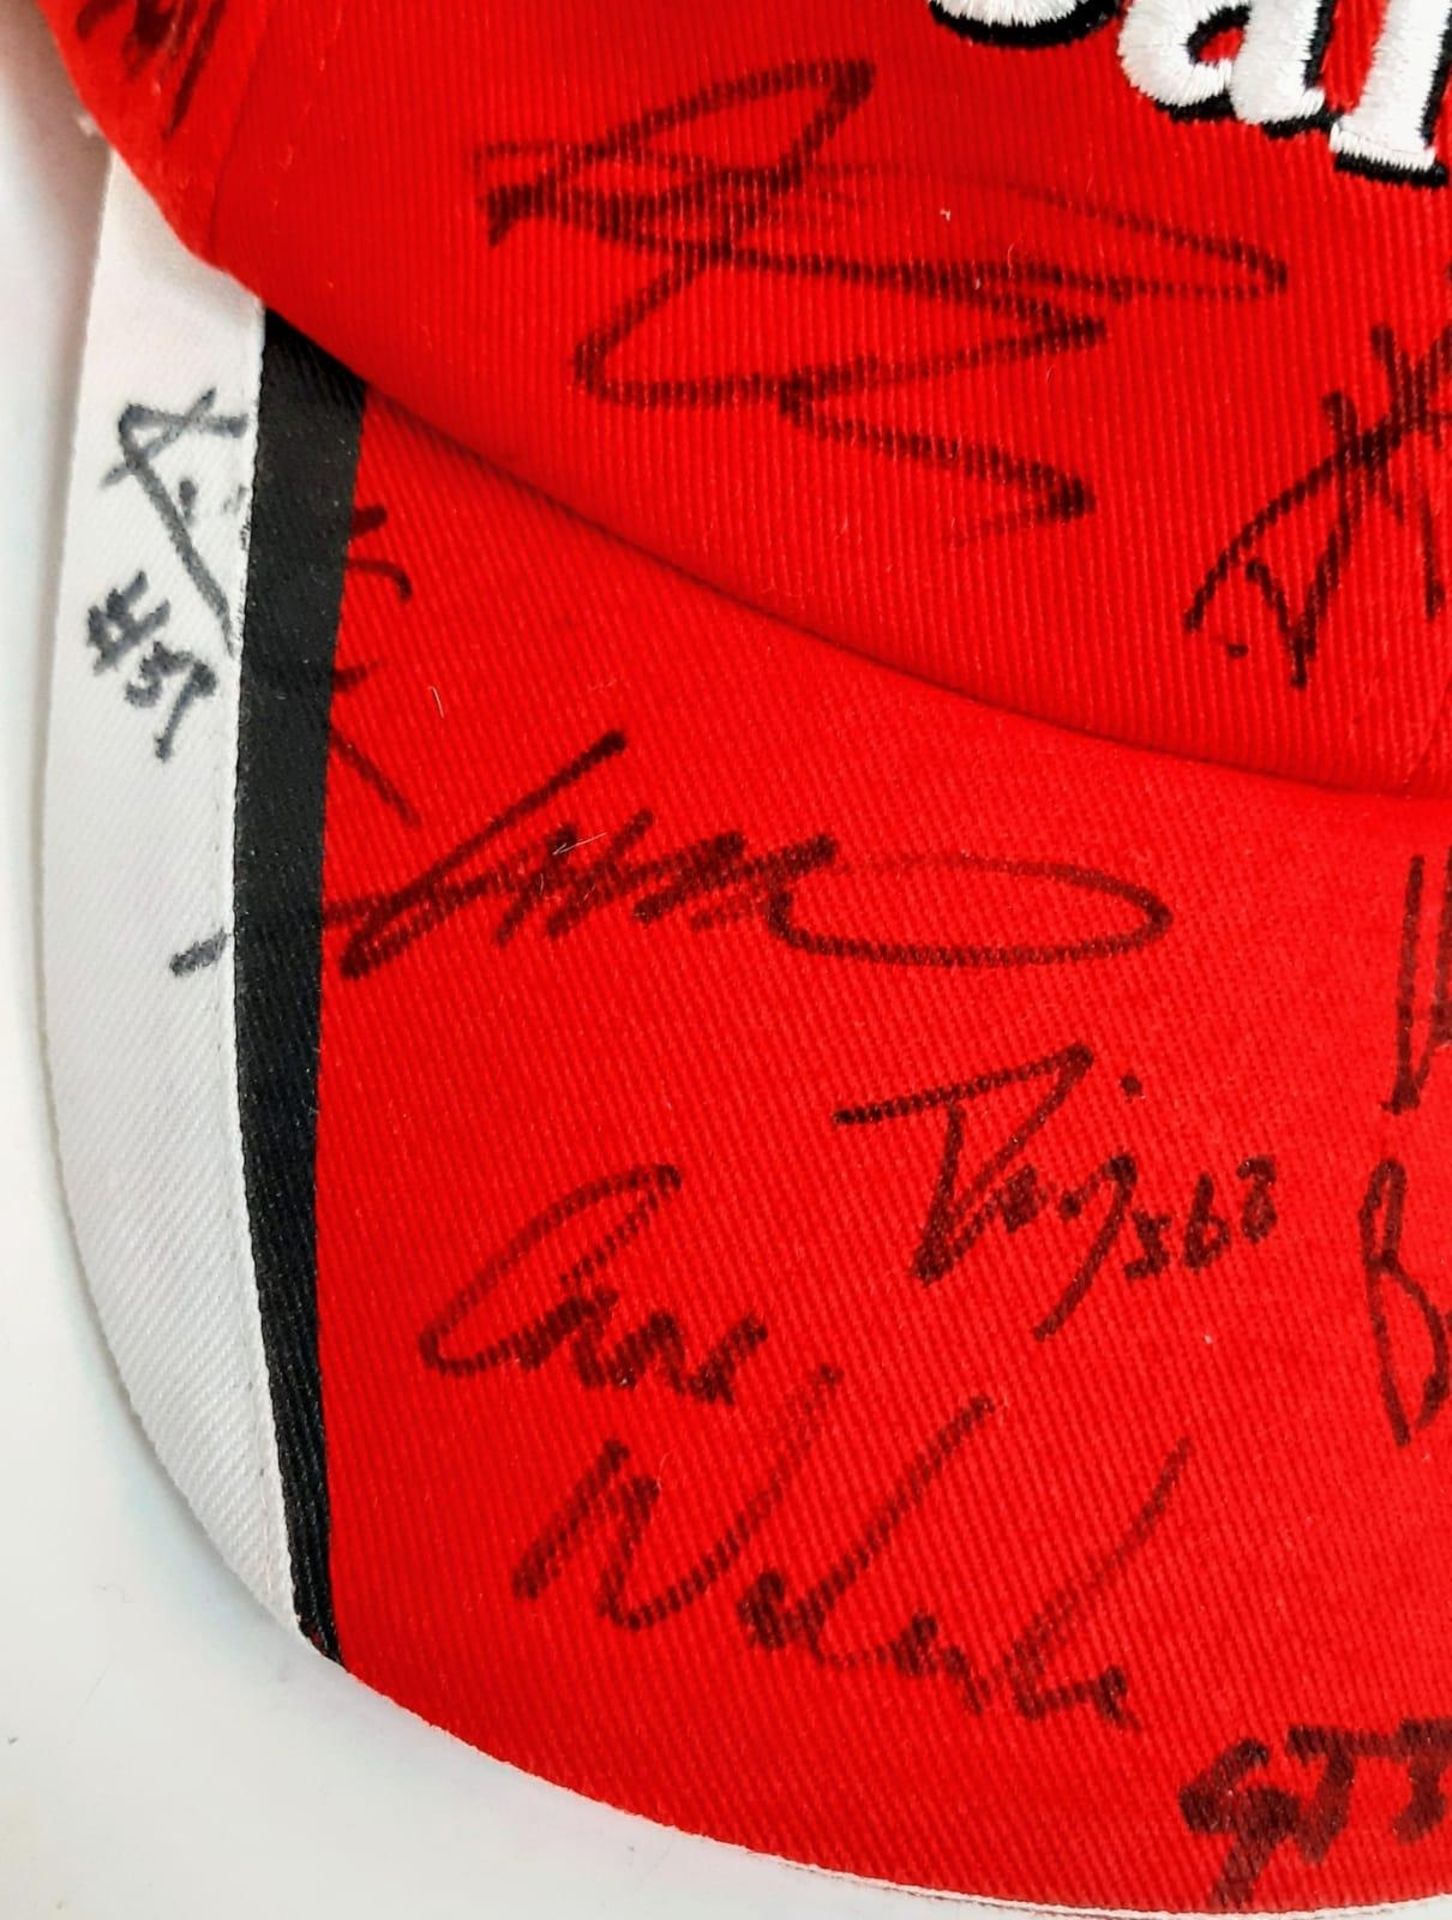 An Official Ferrari Team Cap - Over 20 signatures including Ferrari drivers and team principals. - Image 9 of 14